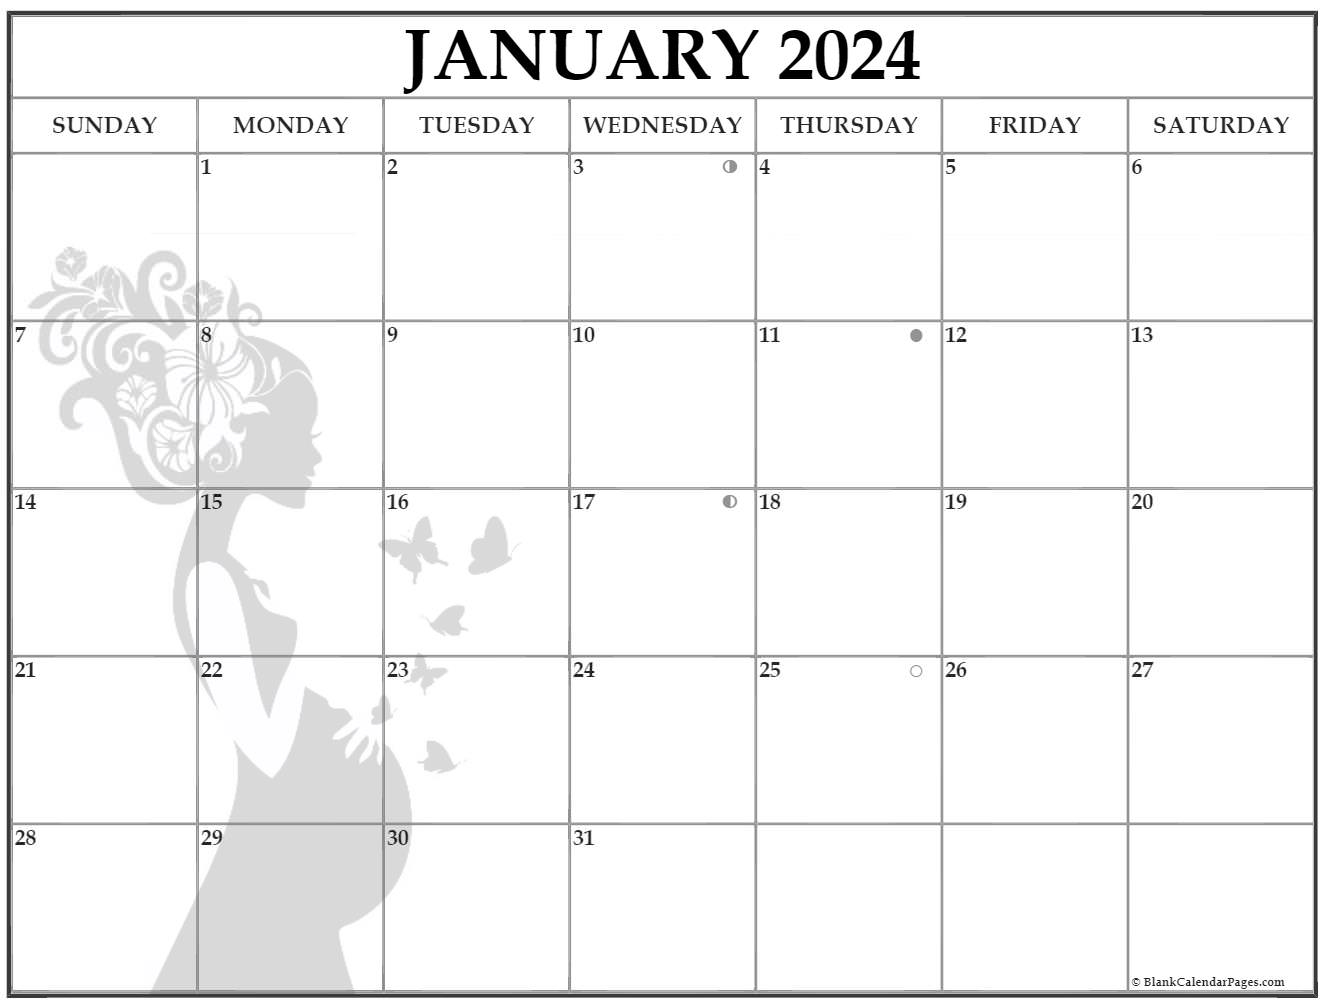 January 2021 Pregnancy Calendar | Fertility Calendar